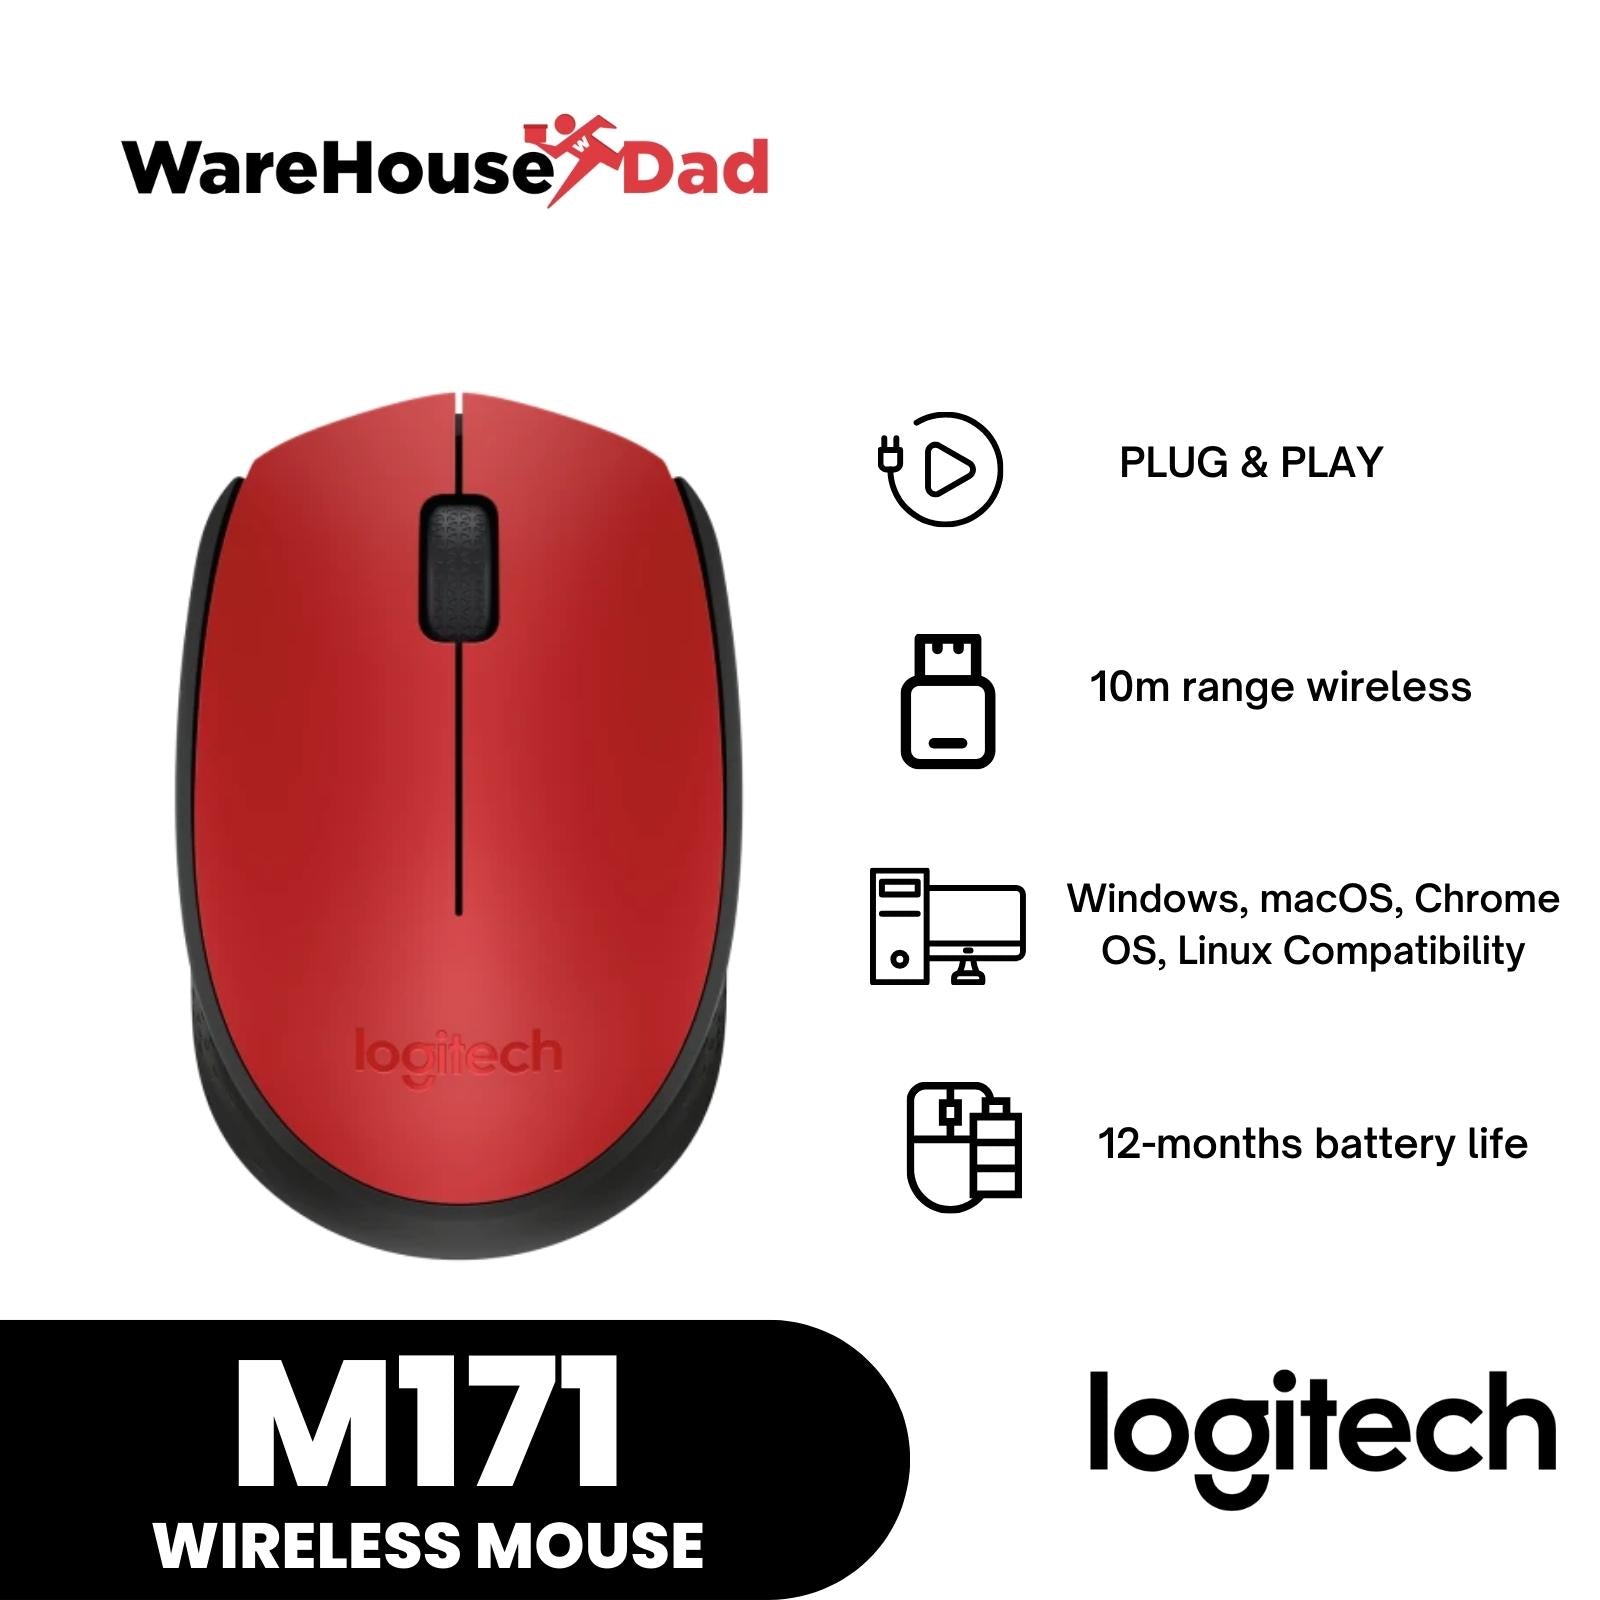 Logitech M171 Wireless Mouse Plug & Play Simplicity – WarehouseDad